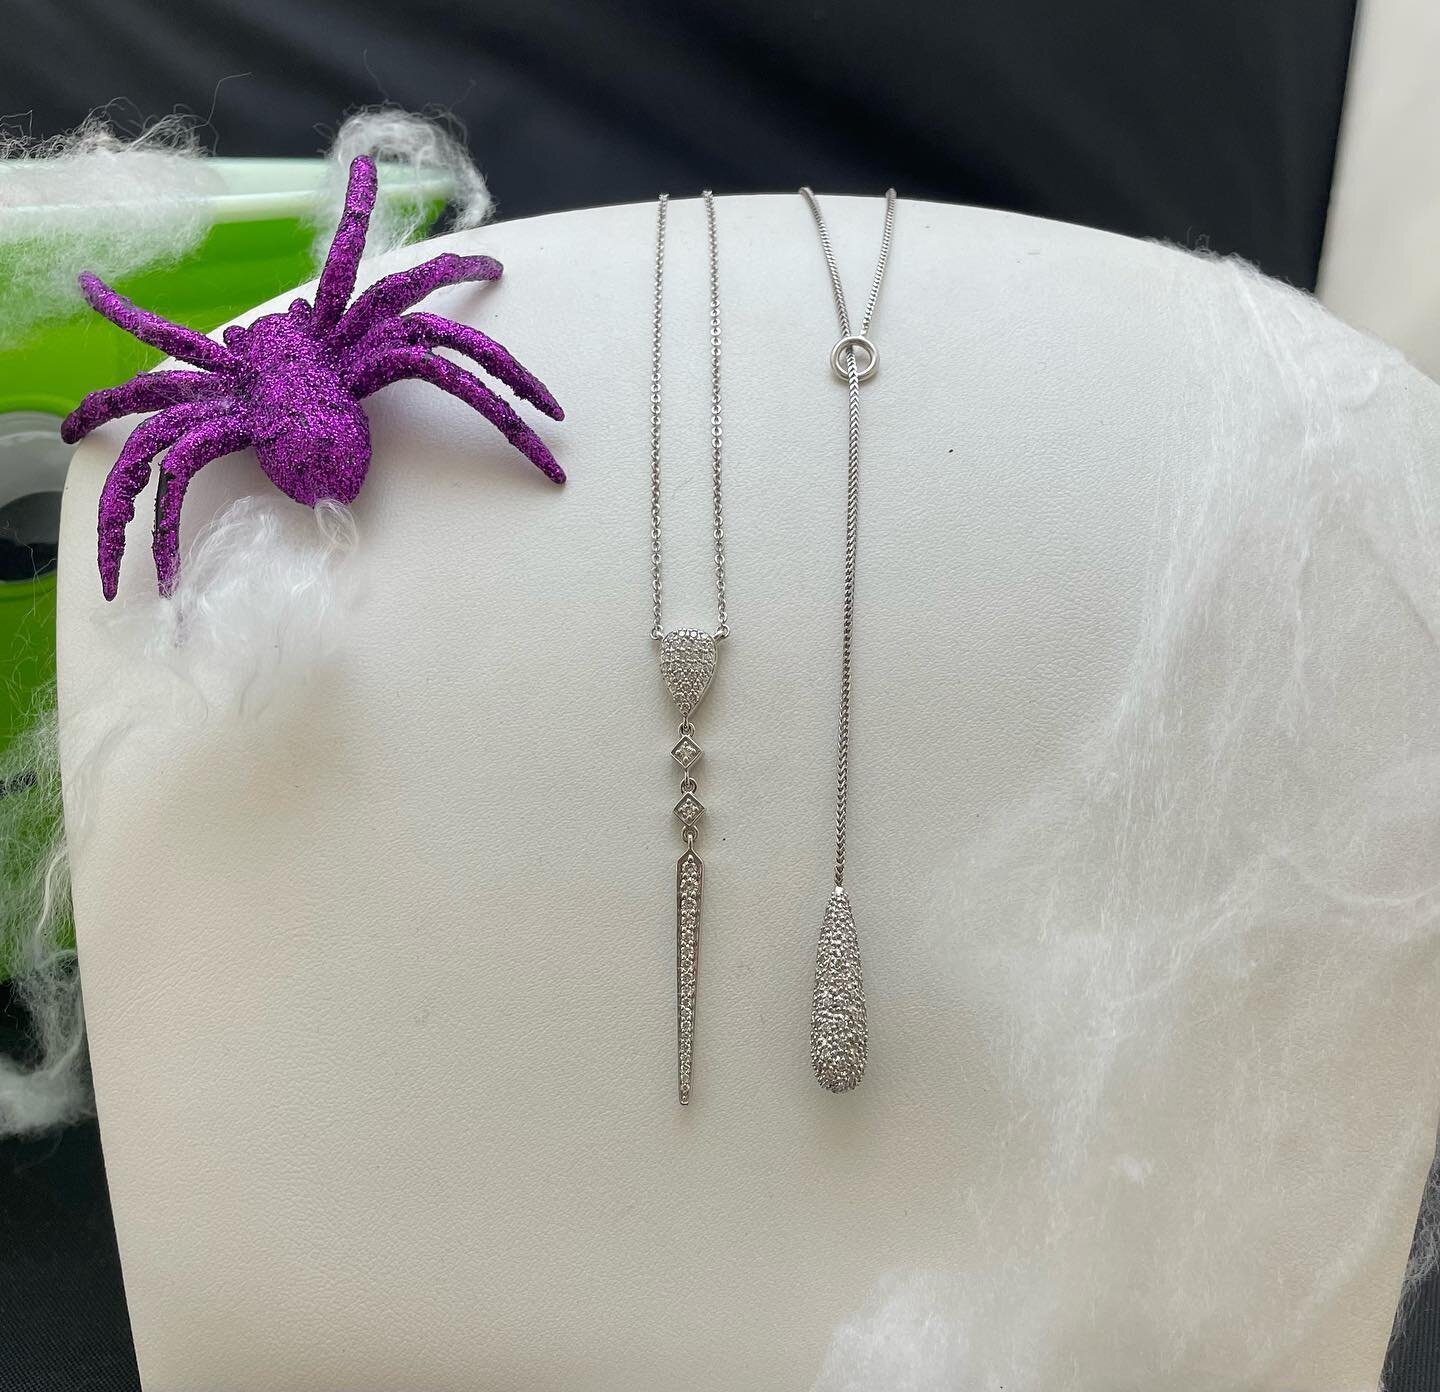 14k and 18k long Diamond layered necklaces!
#14k #18k #diamond #vandelljewelersdesigners #necklaces #jewelry #spookyseason